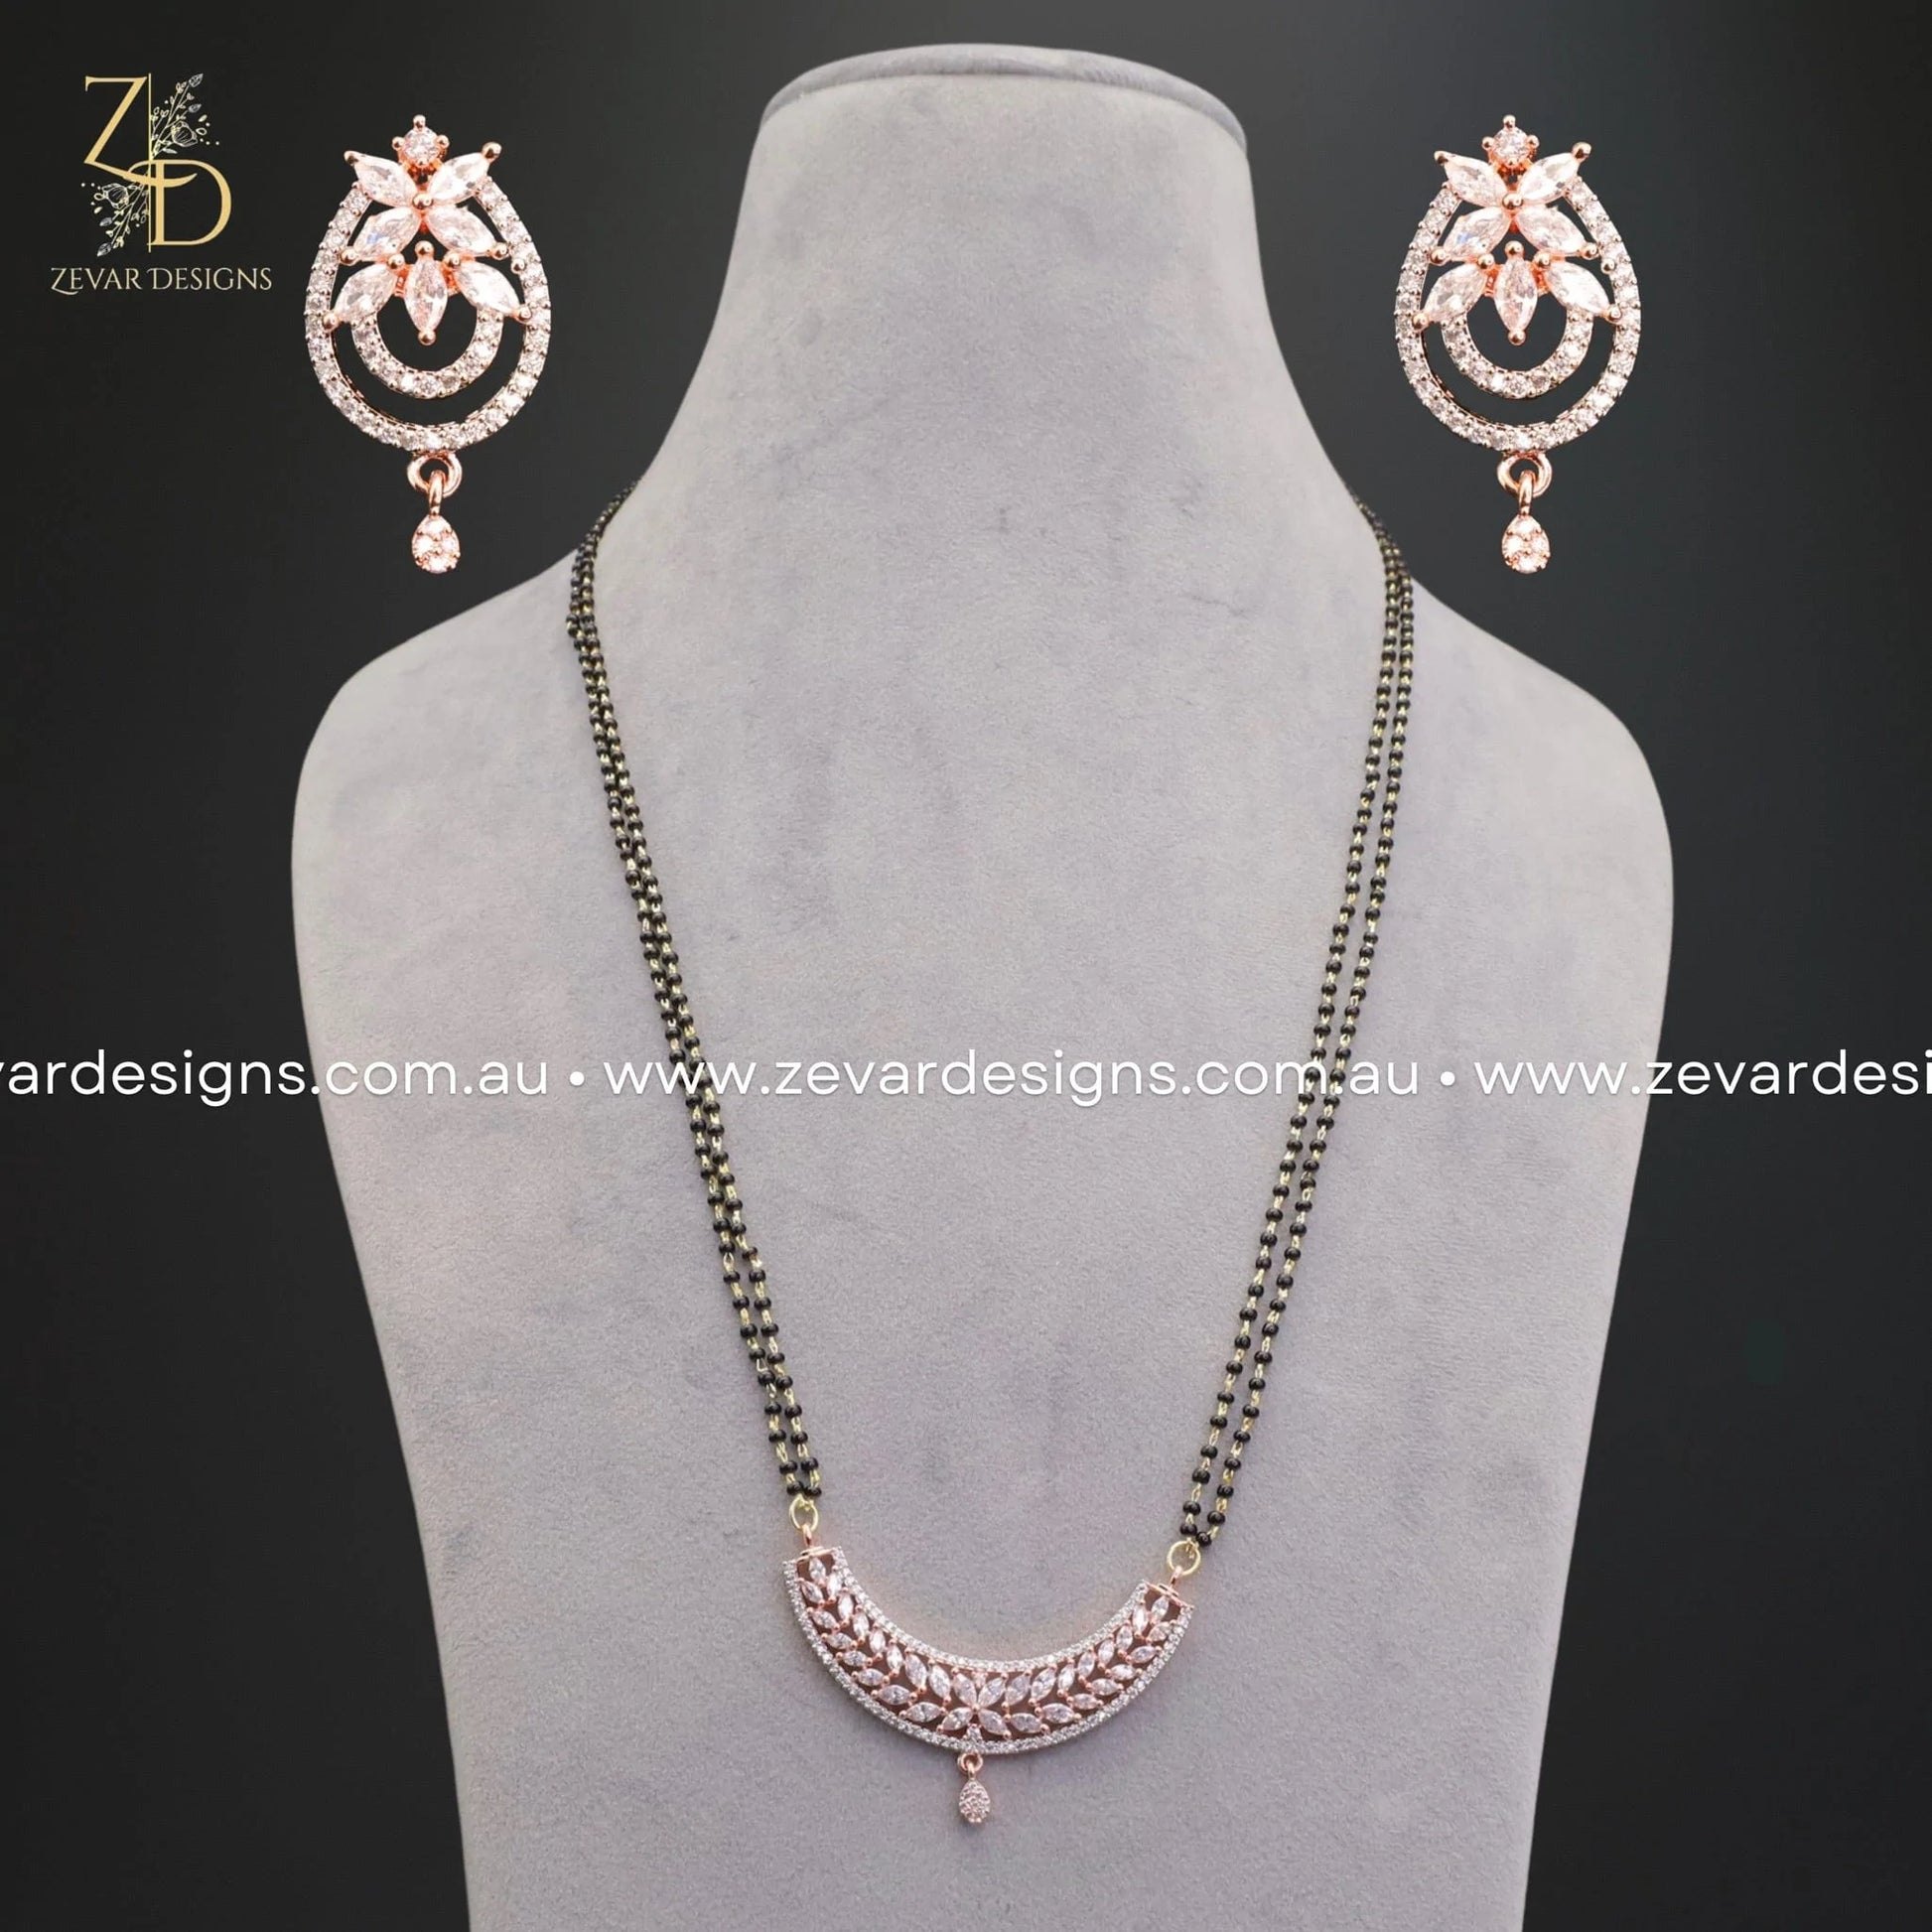 Zevar Designs Mangalsutra AD/Zircon  and Earrings Set - Rose Gold